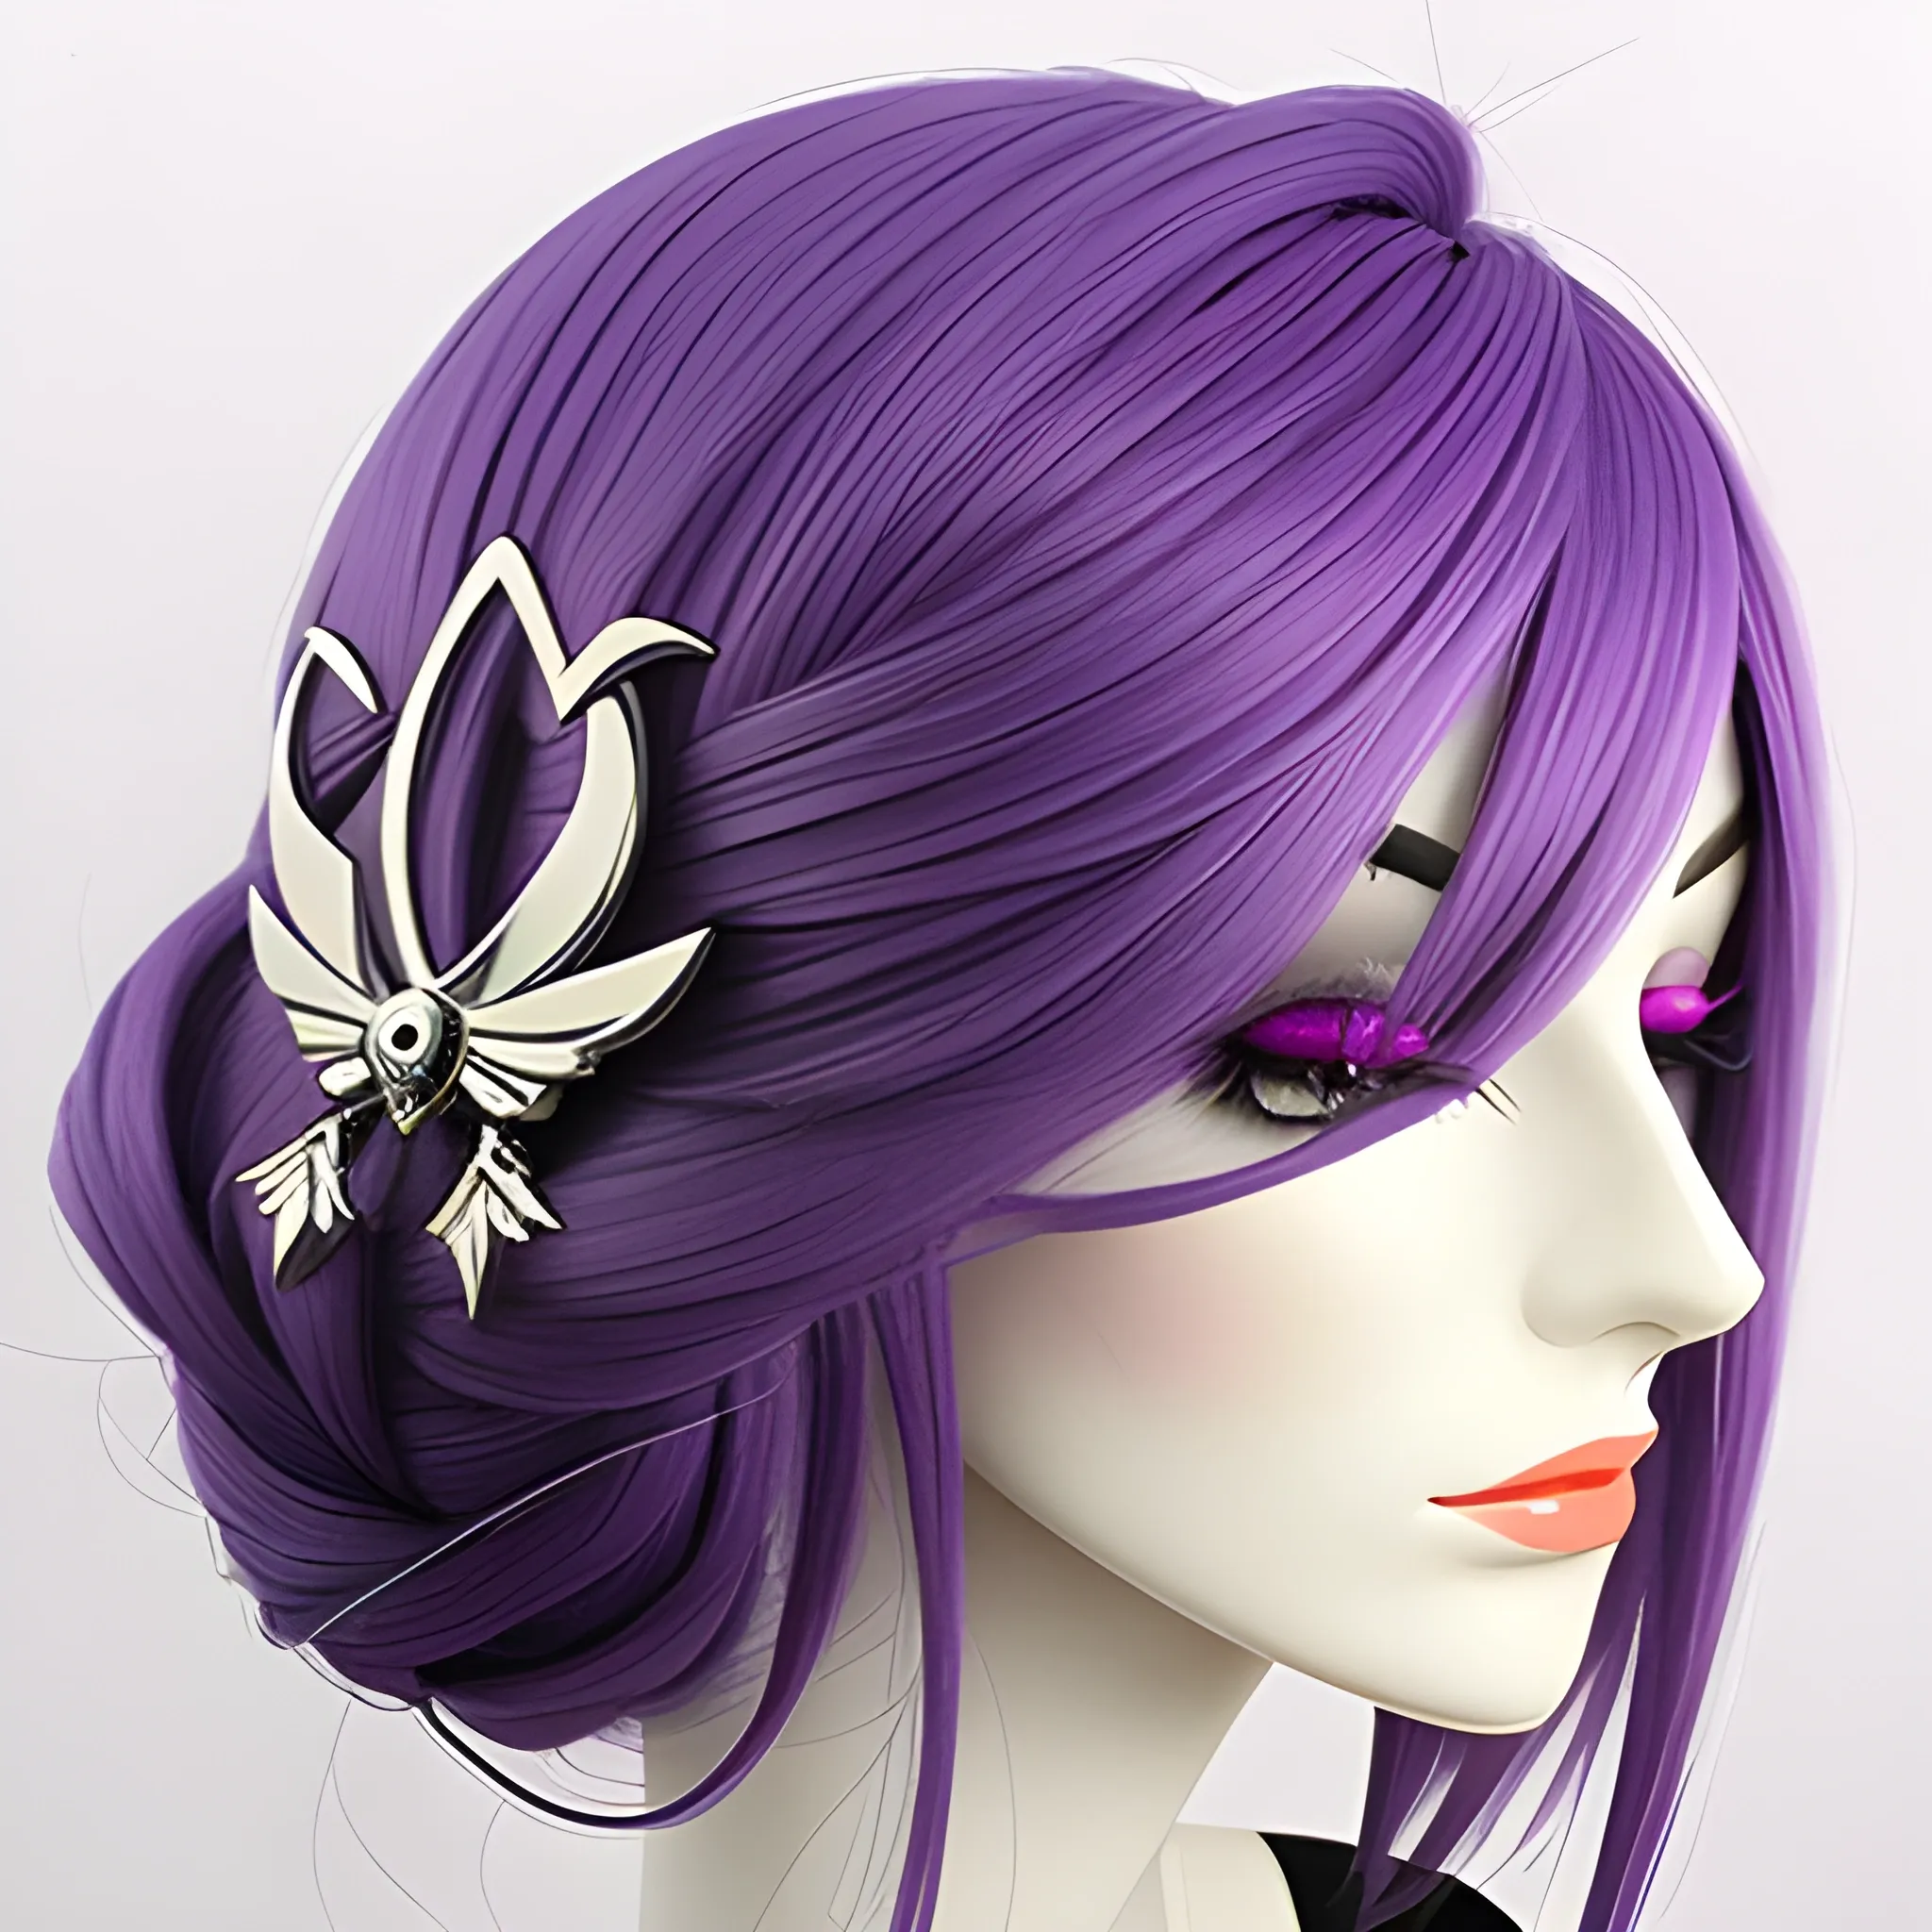 Fashionable anime girl, purple hair, moon hairclip